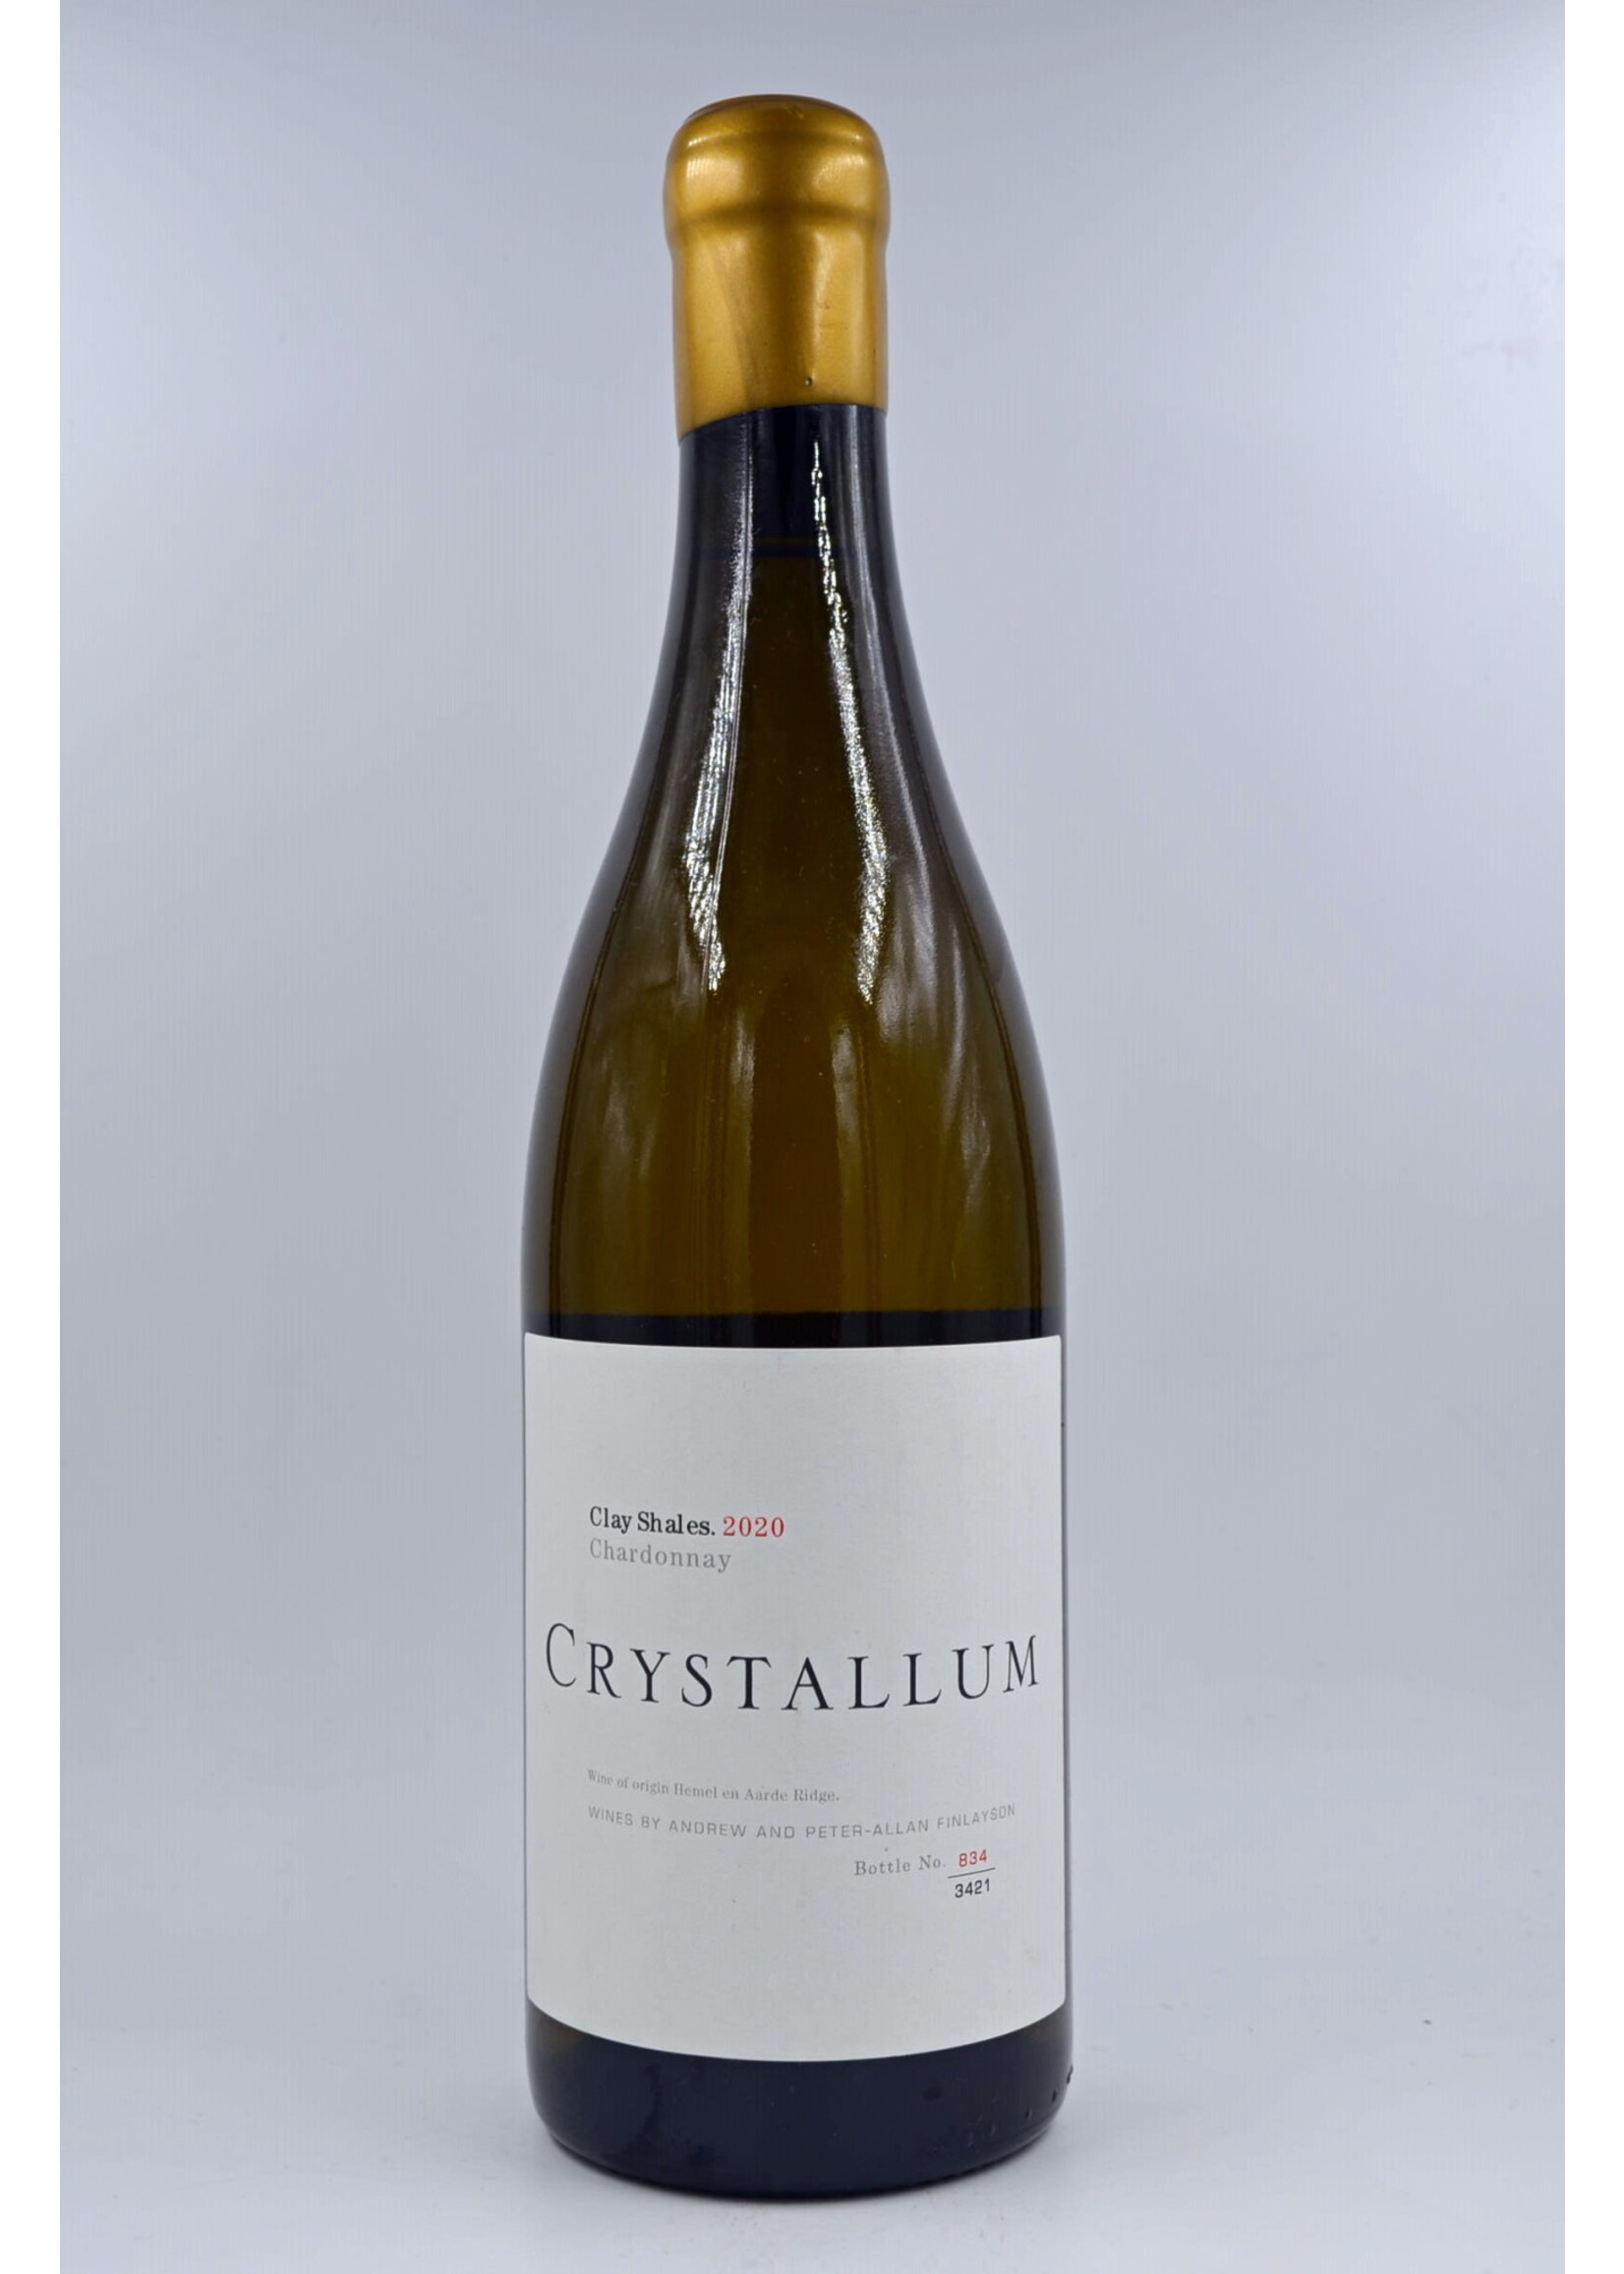 2020 Chardonnay Clay Shales Crystallum